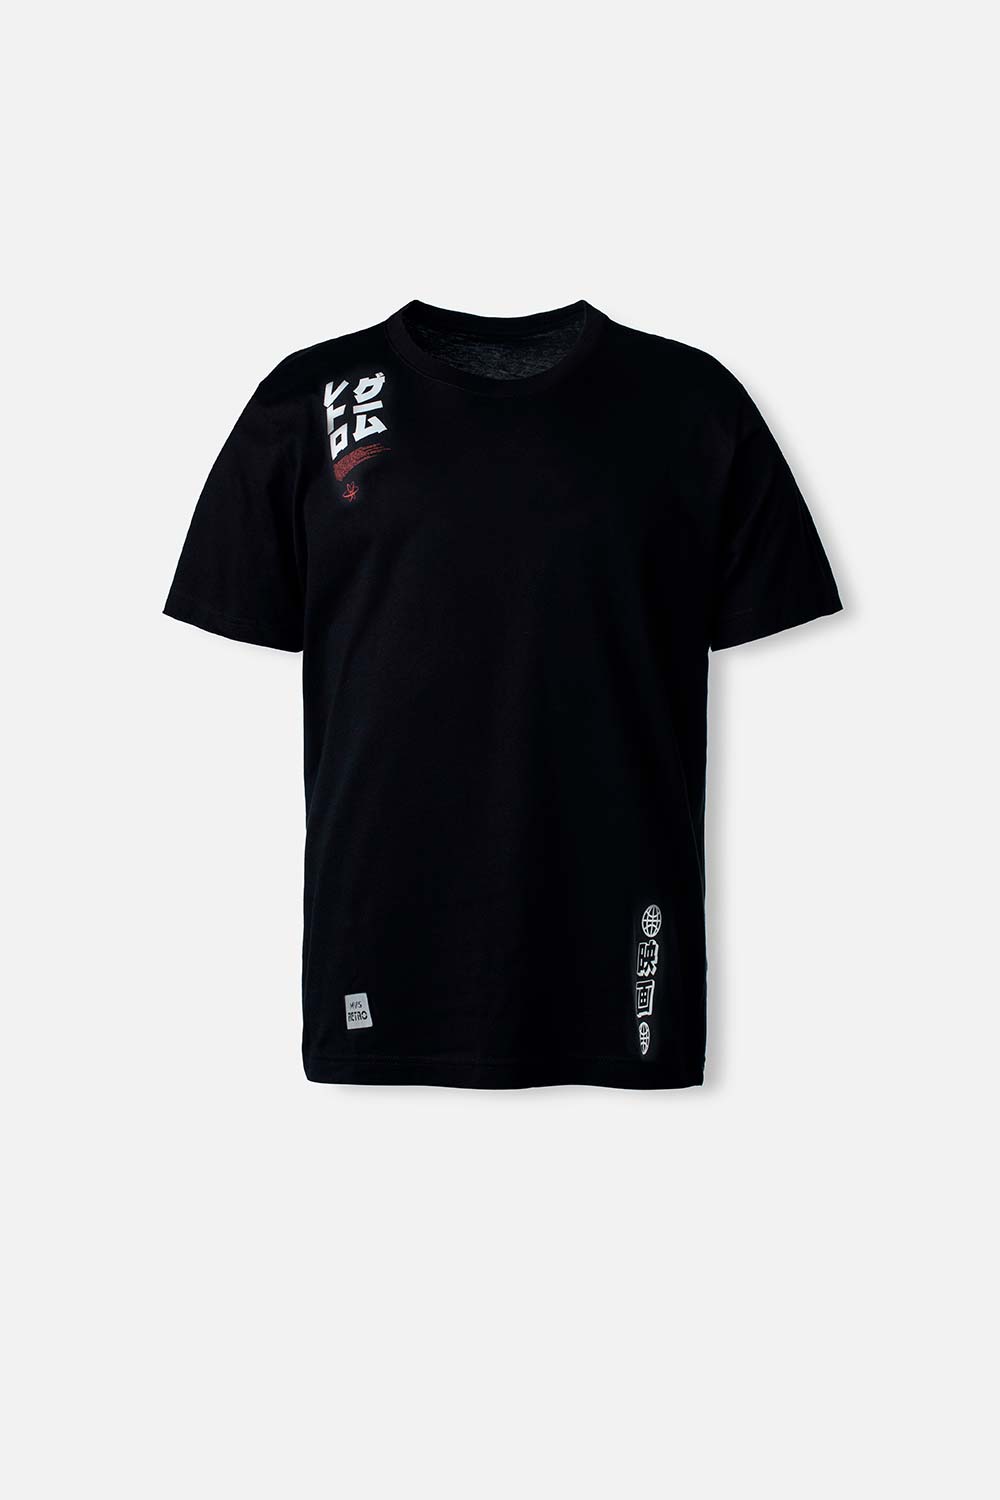 Camiseta Movies negra de cuello redondo género neutro XS-0